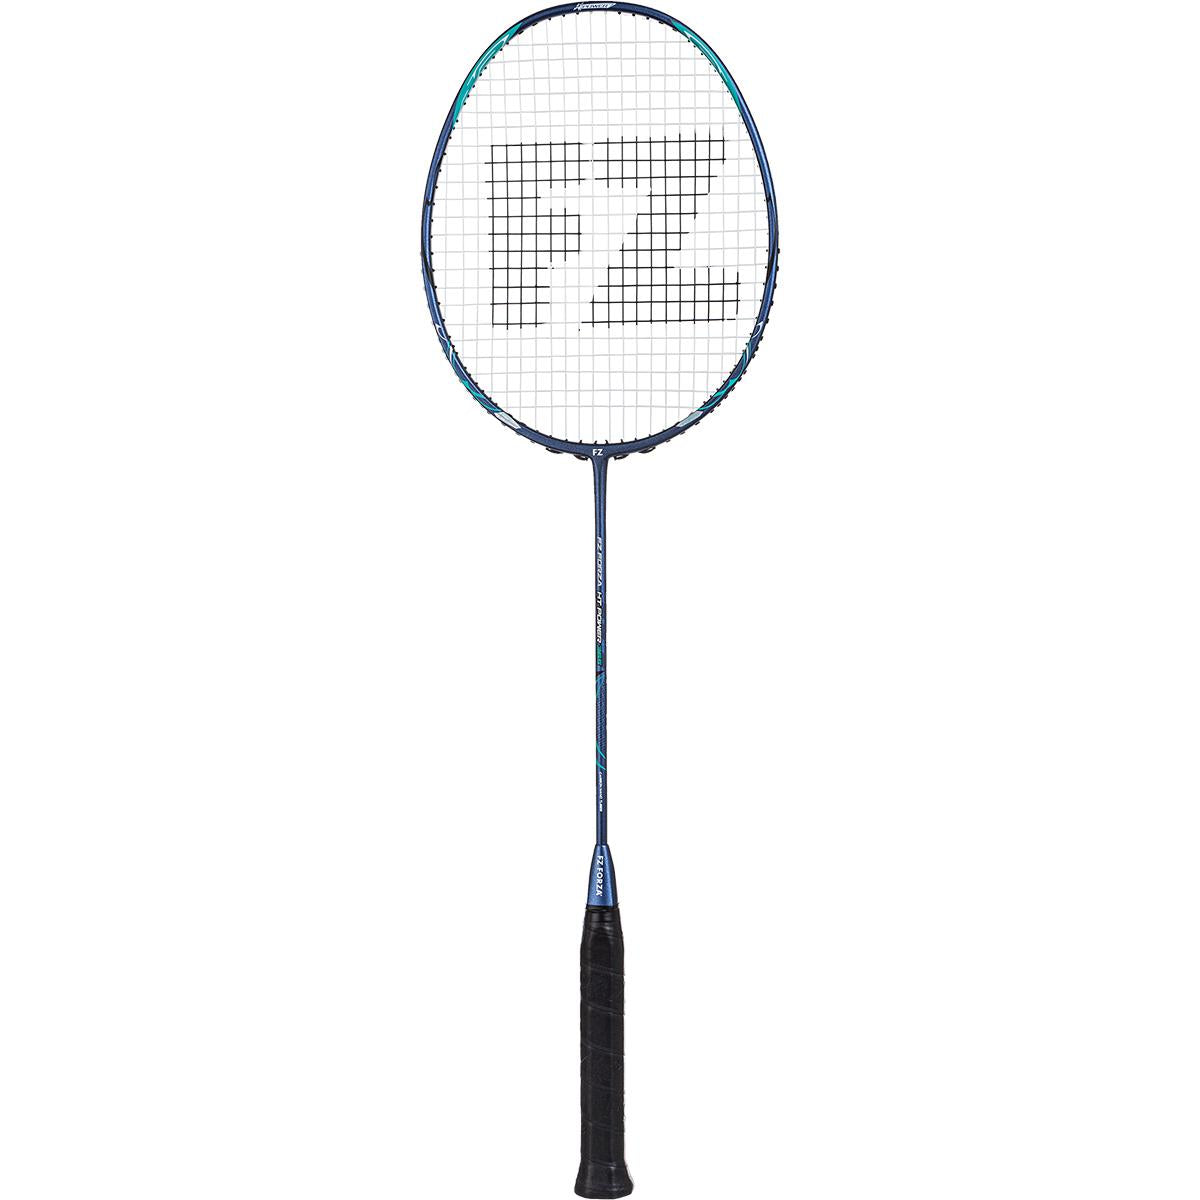 FZ Forza HT Power 36-S Badminton Racket - Black / Green